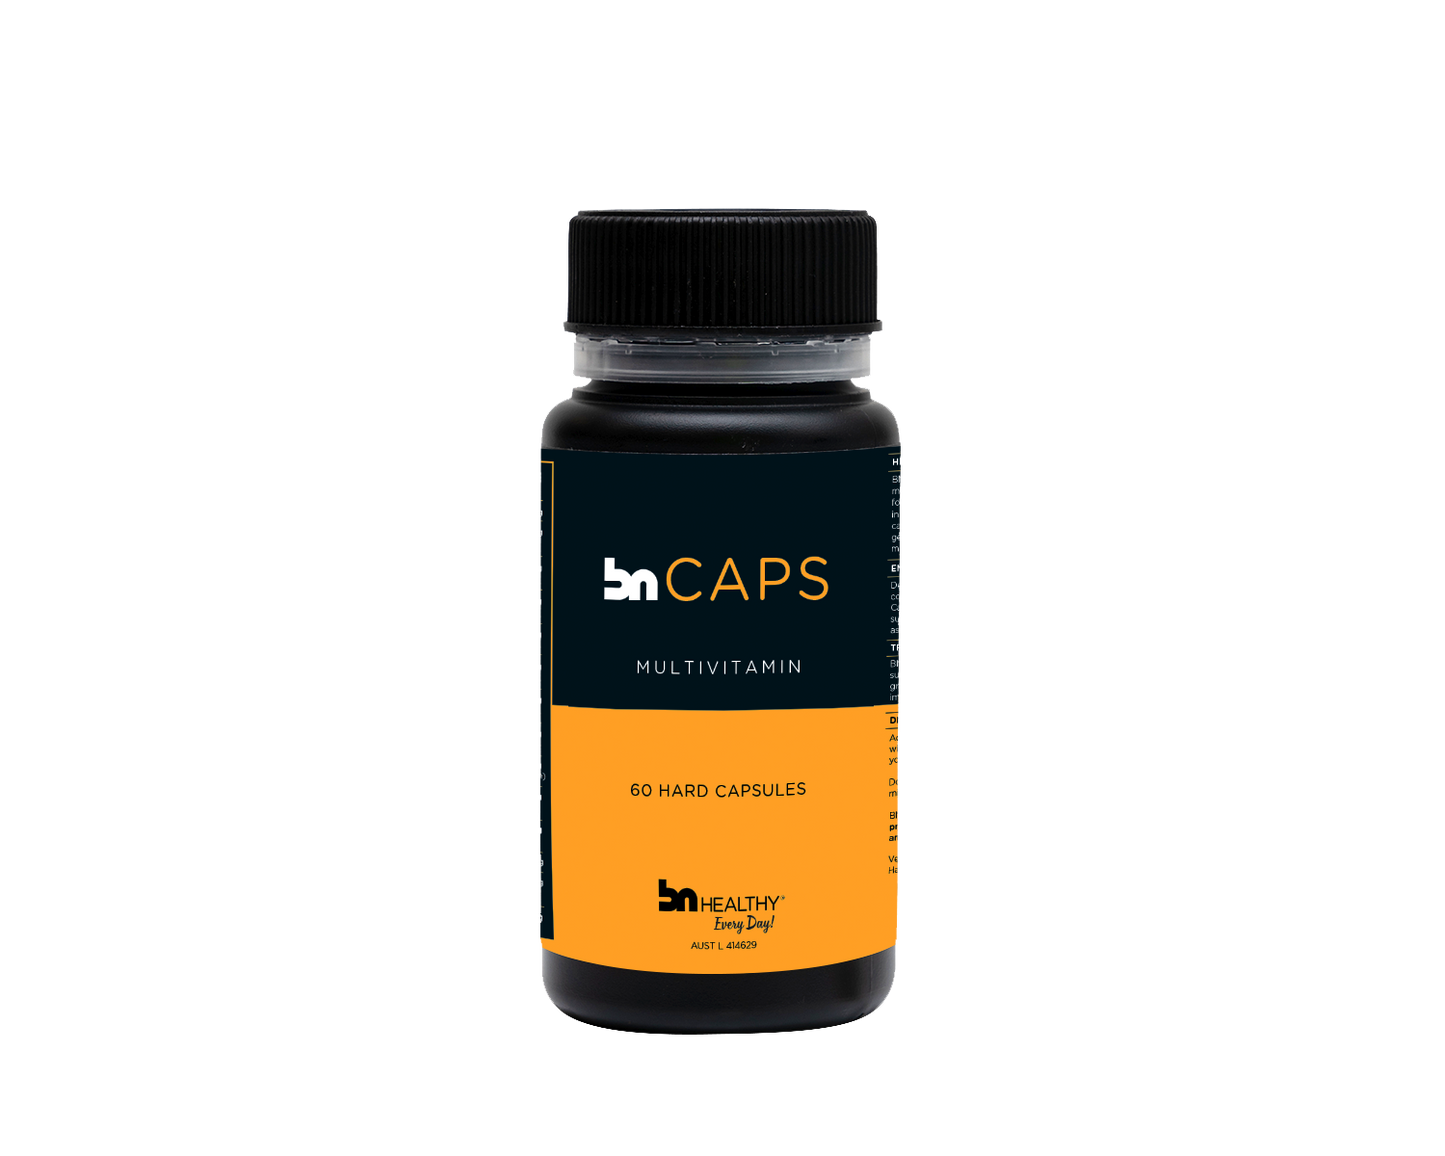 BN Caps - Multivitamin Capsules - 3 Month Subscription - Save 20%